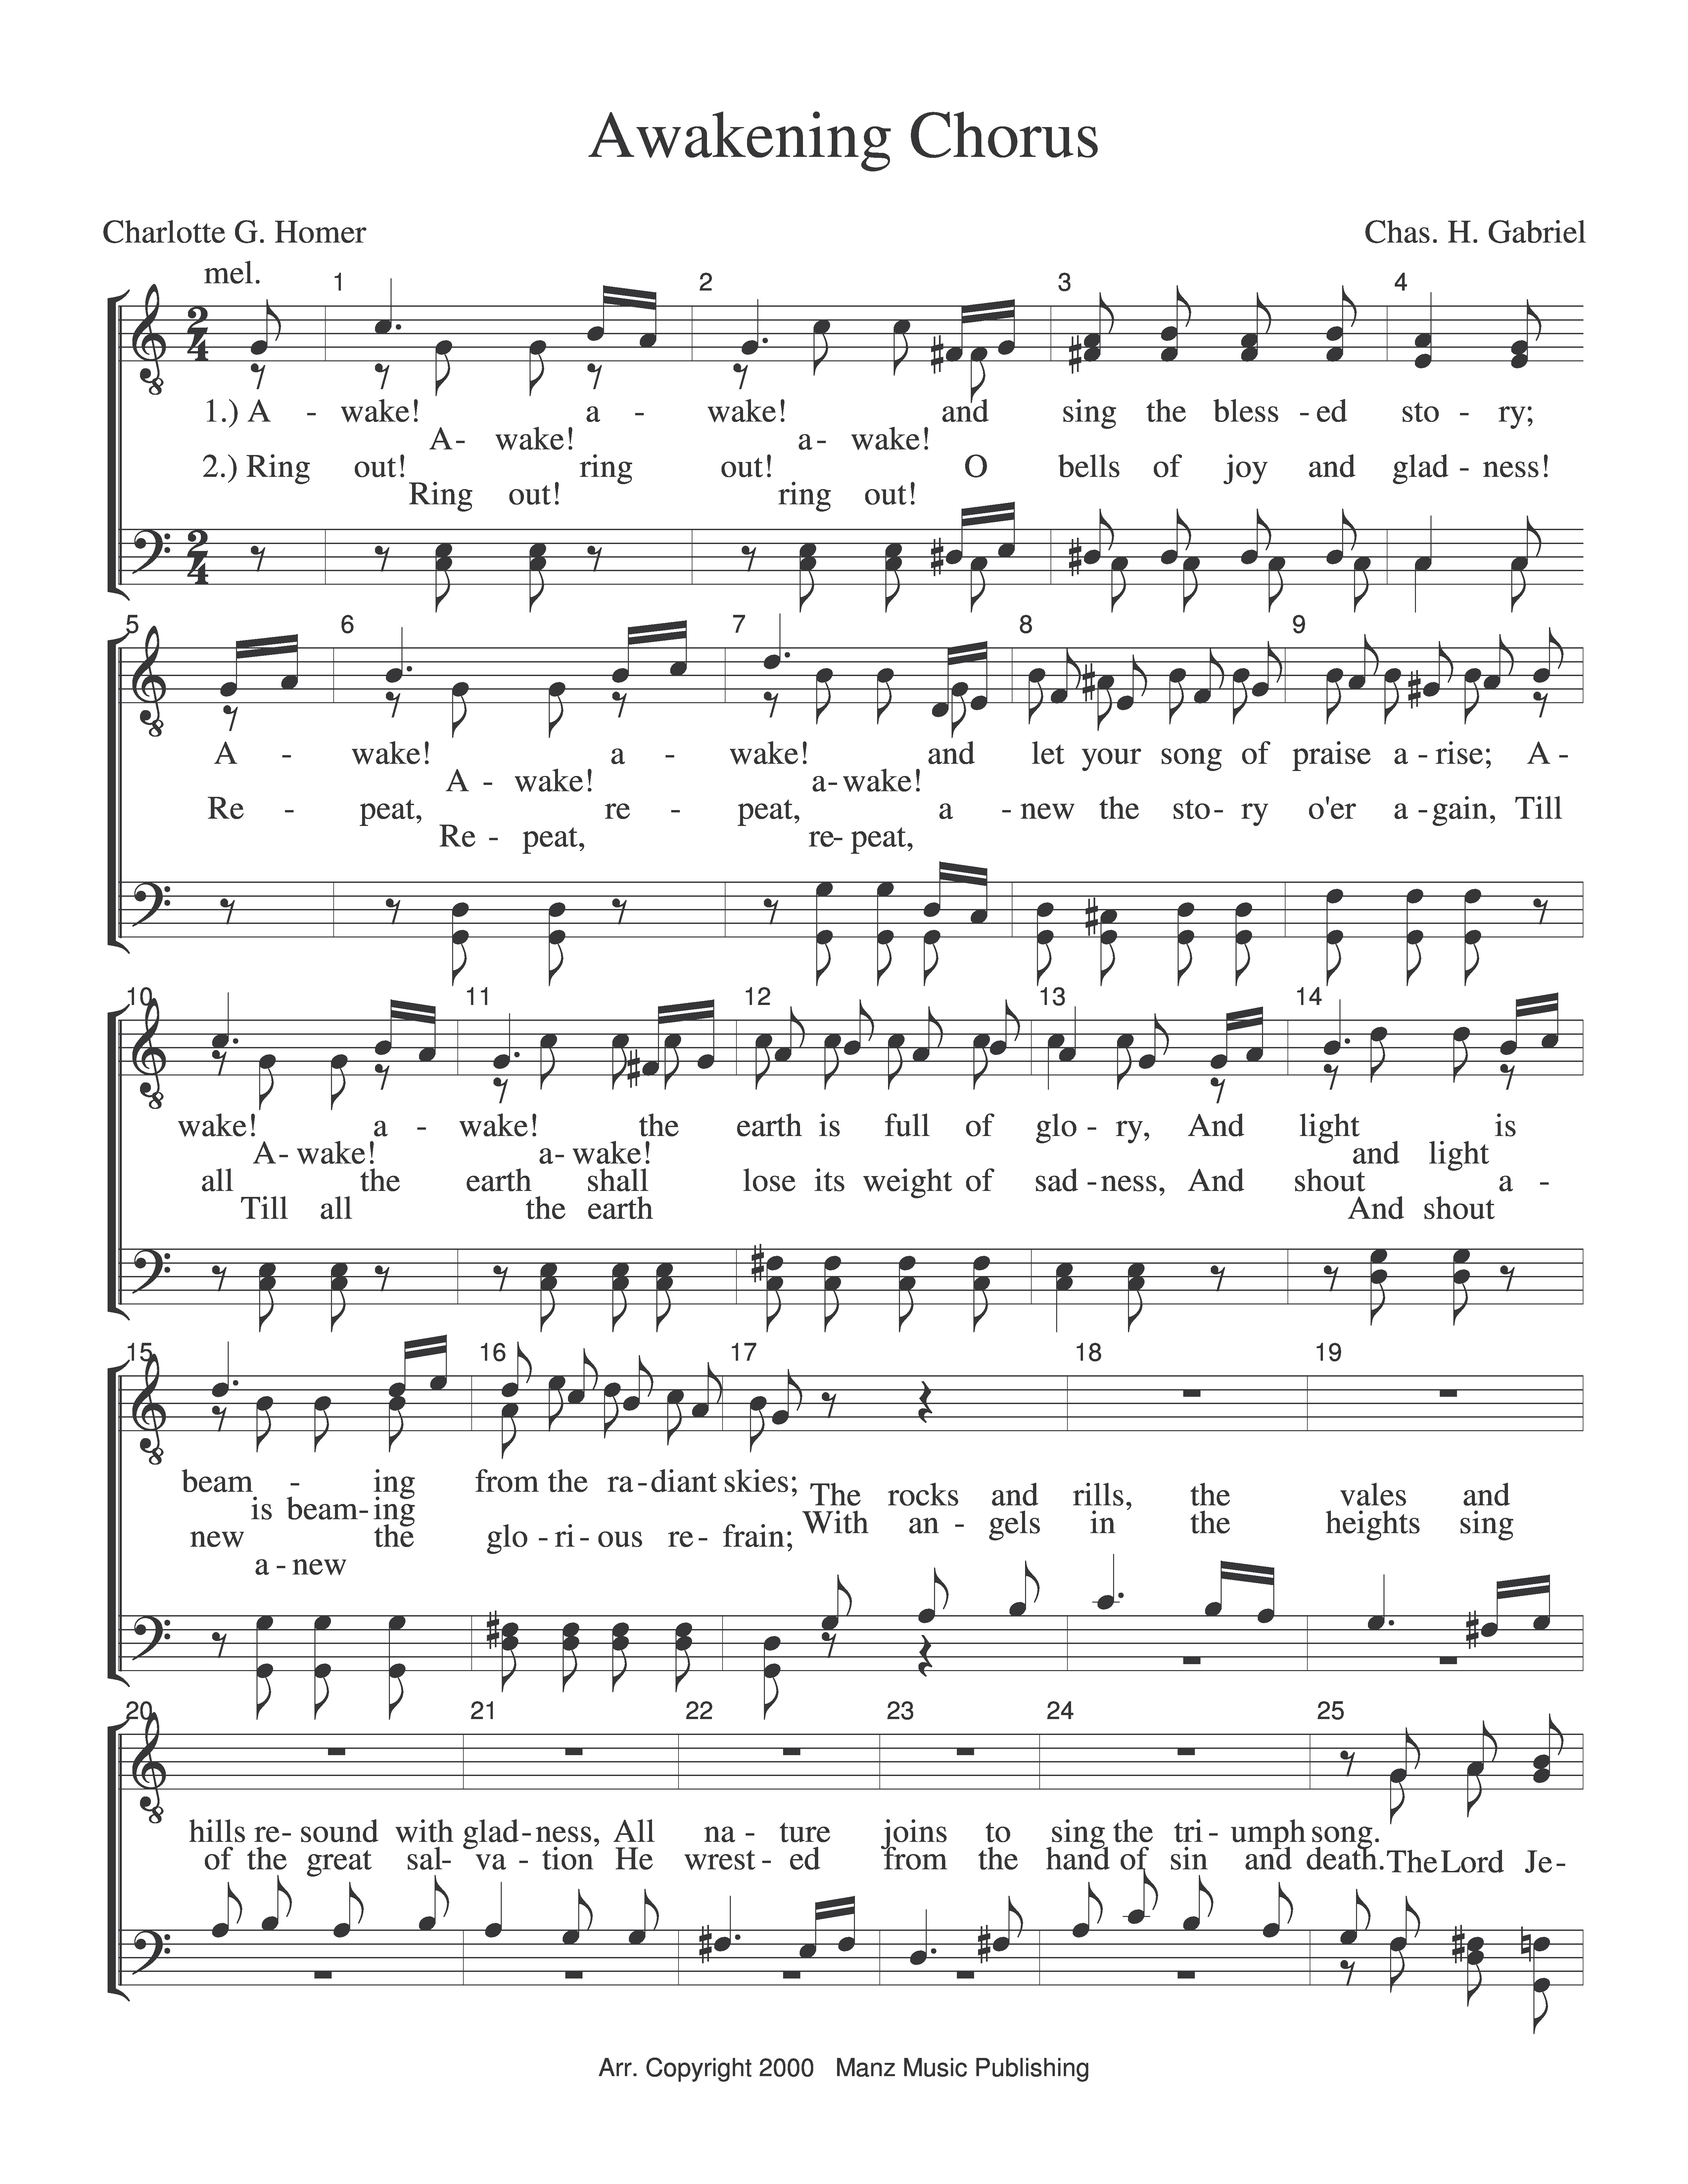 Awakening Chorus page 1